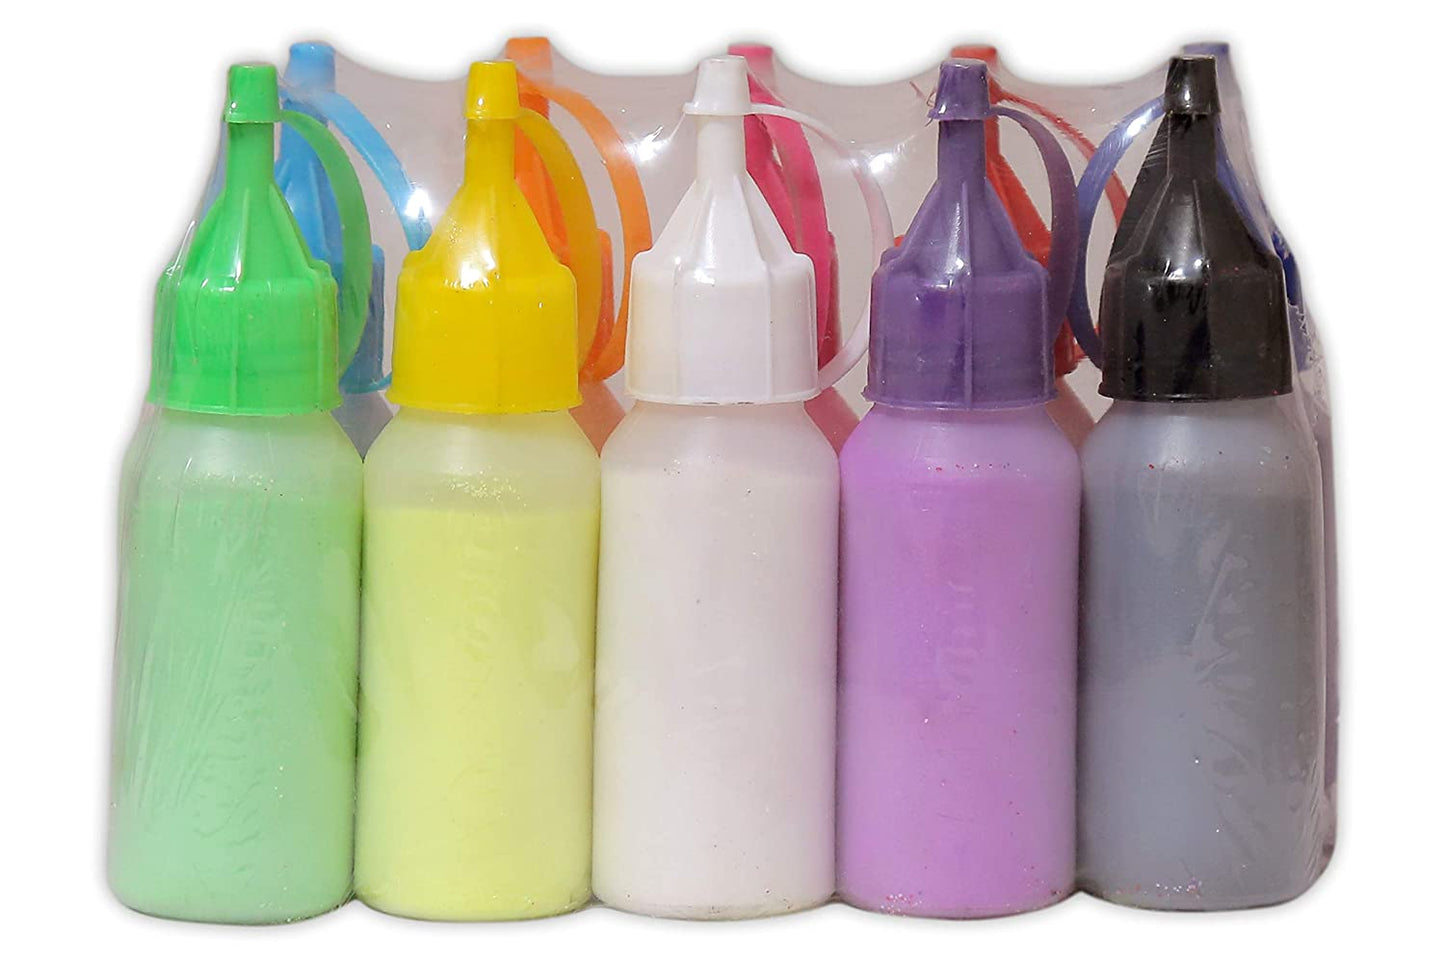 Rangoli Colour Powder Bottles for Floor Rangoli, Pooja Set of 10 Rangoli Colors in Plastic Squeeze Bottles (80g Each)